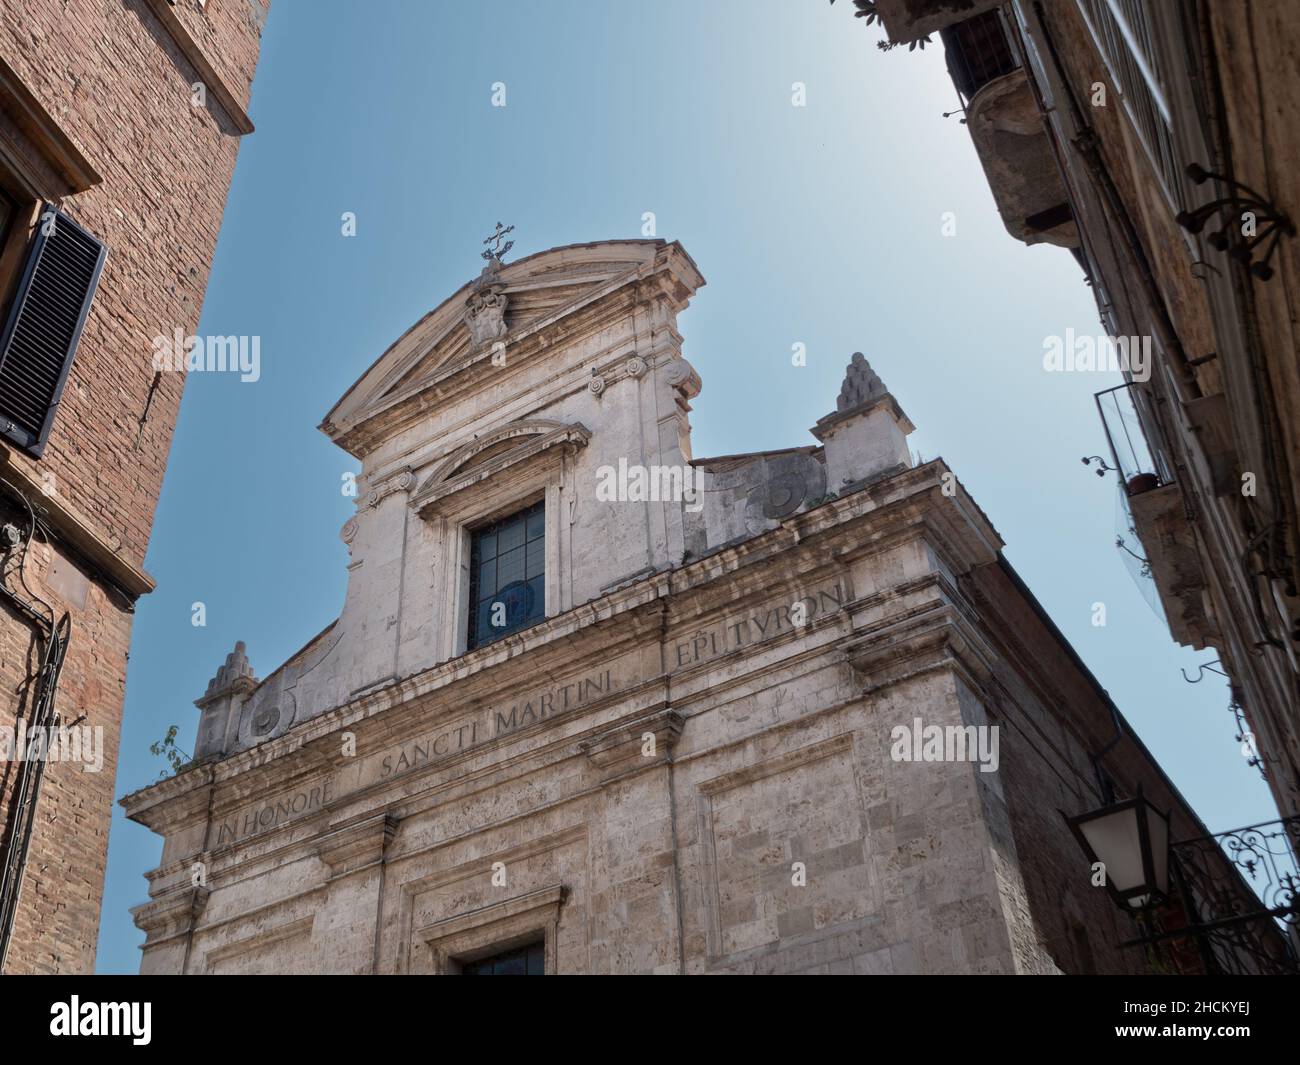 Chiesa San Martino Catholic Church in Siena, Tuscany, Italy, with inscription 'in honor of Saint Martin of Tours' Stock Photo